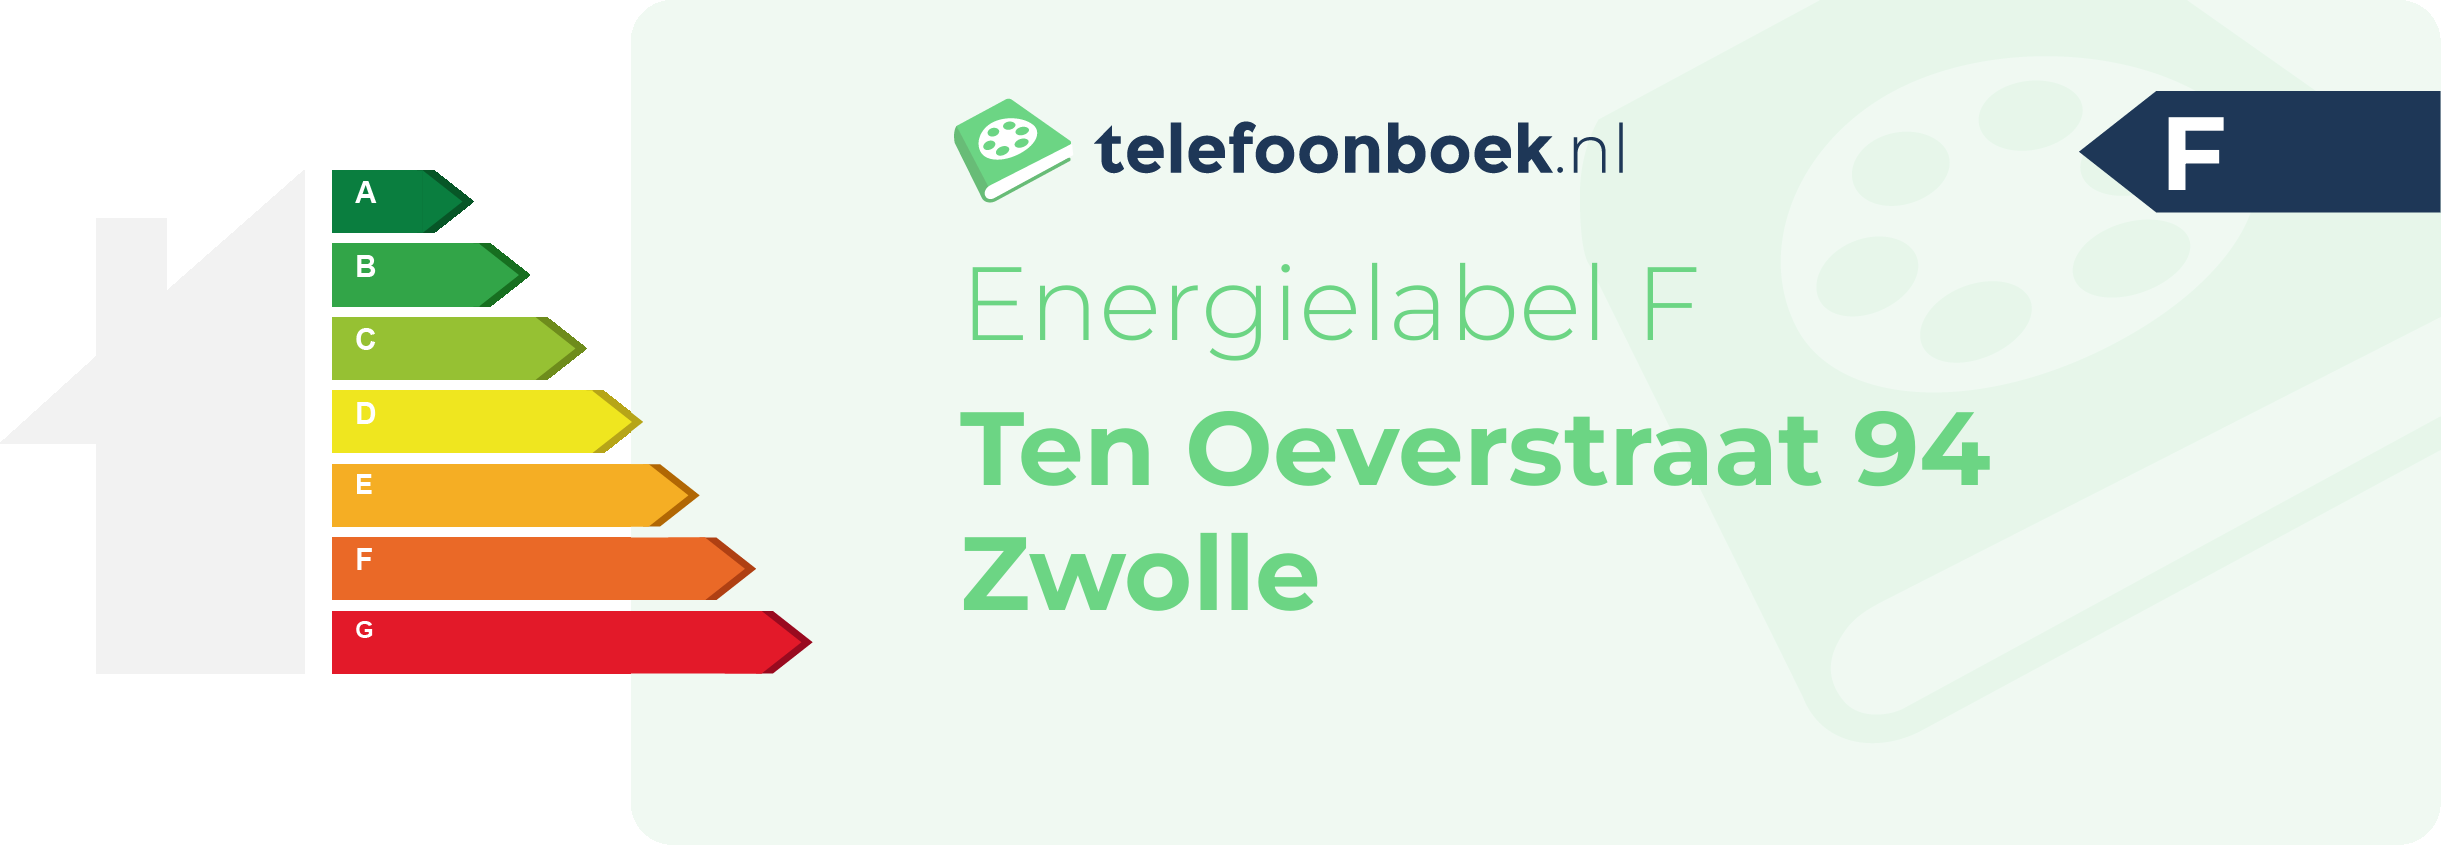 Energielabel Ten Oeverstraat 94 Zwolle